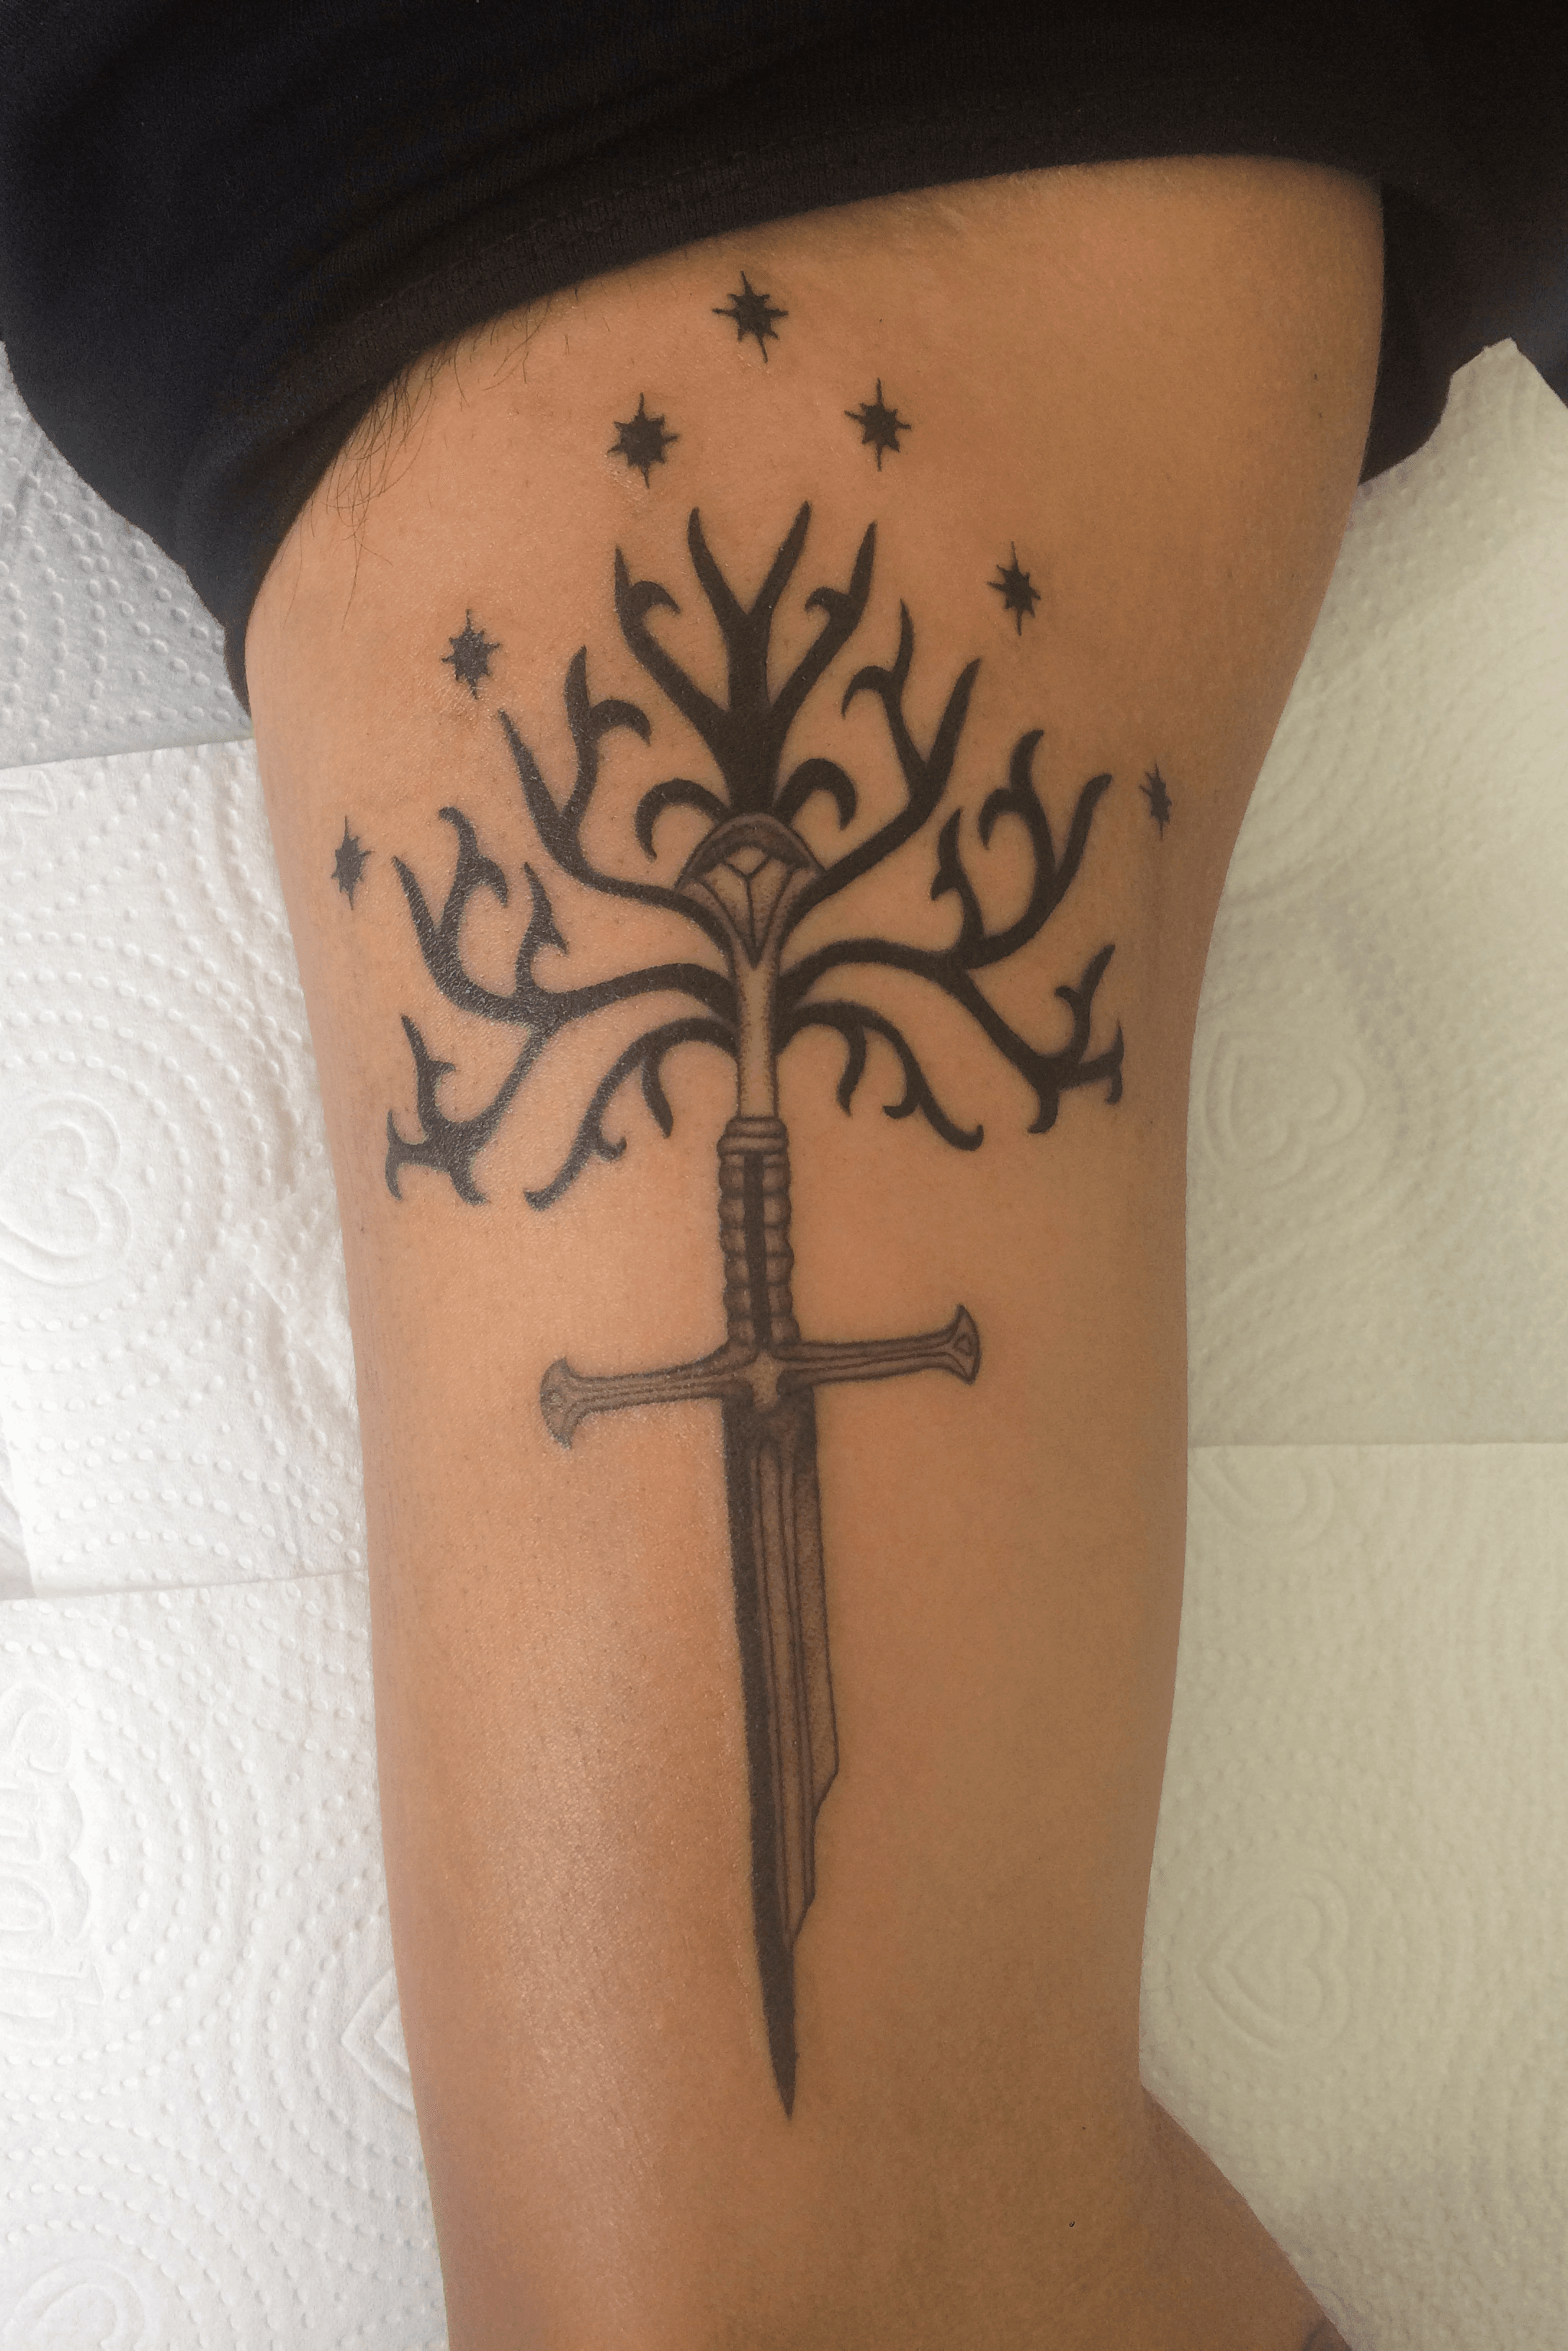 Tattoo uploaded by Wesley Araujo  Gondor Tree tolkien tolkientattoo  gondortree gondor tree Lotr Nimloth eldar  Tattoodo